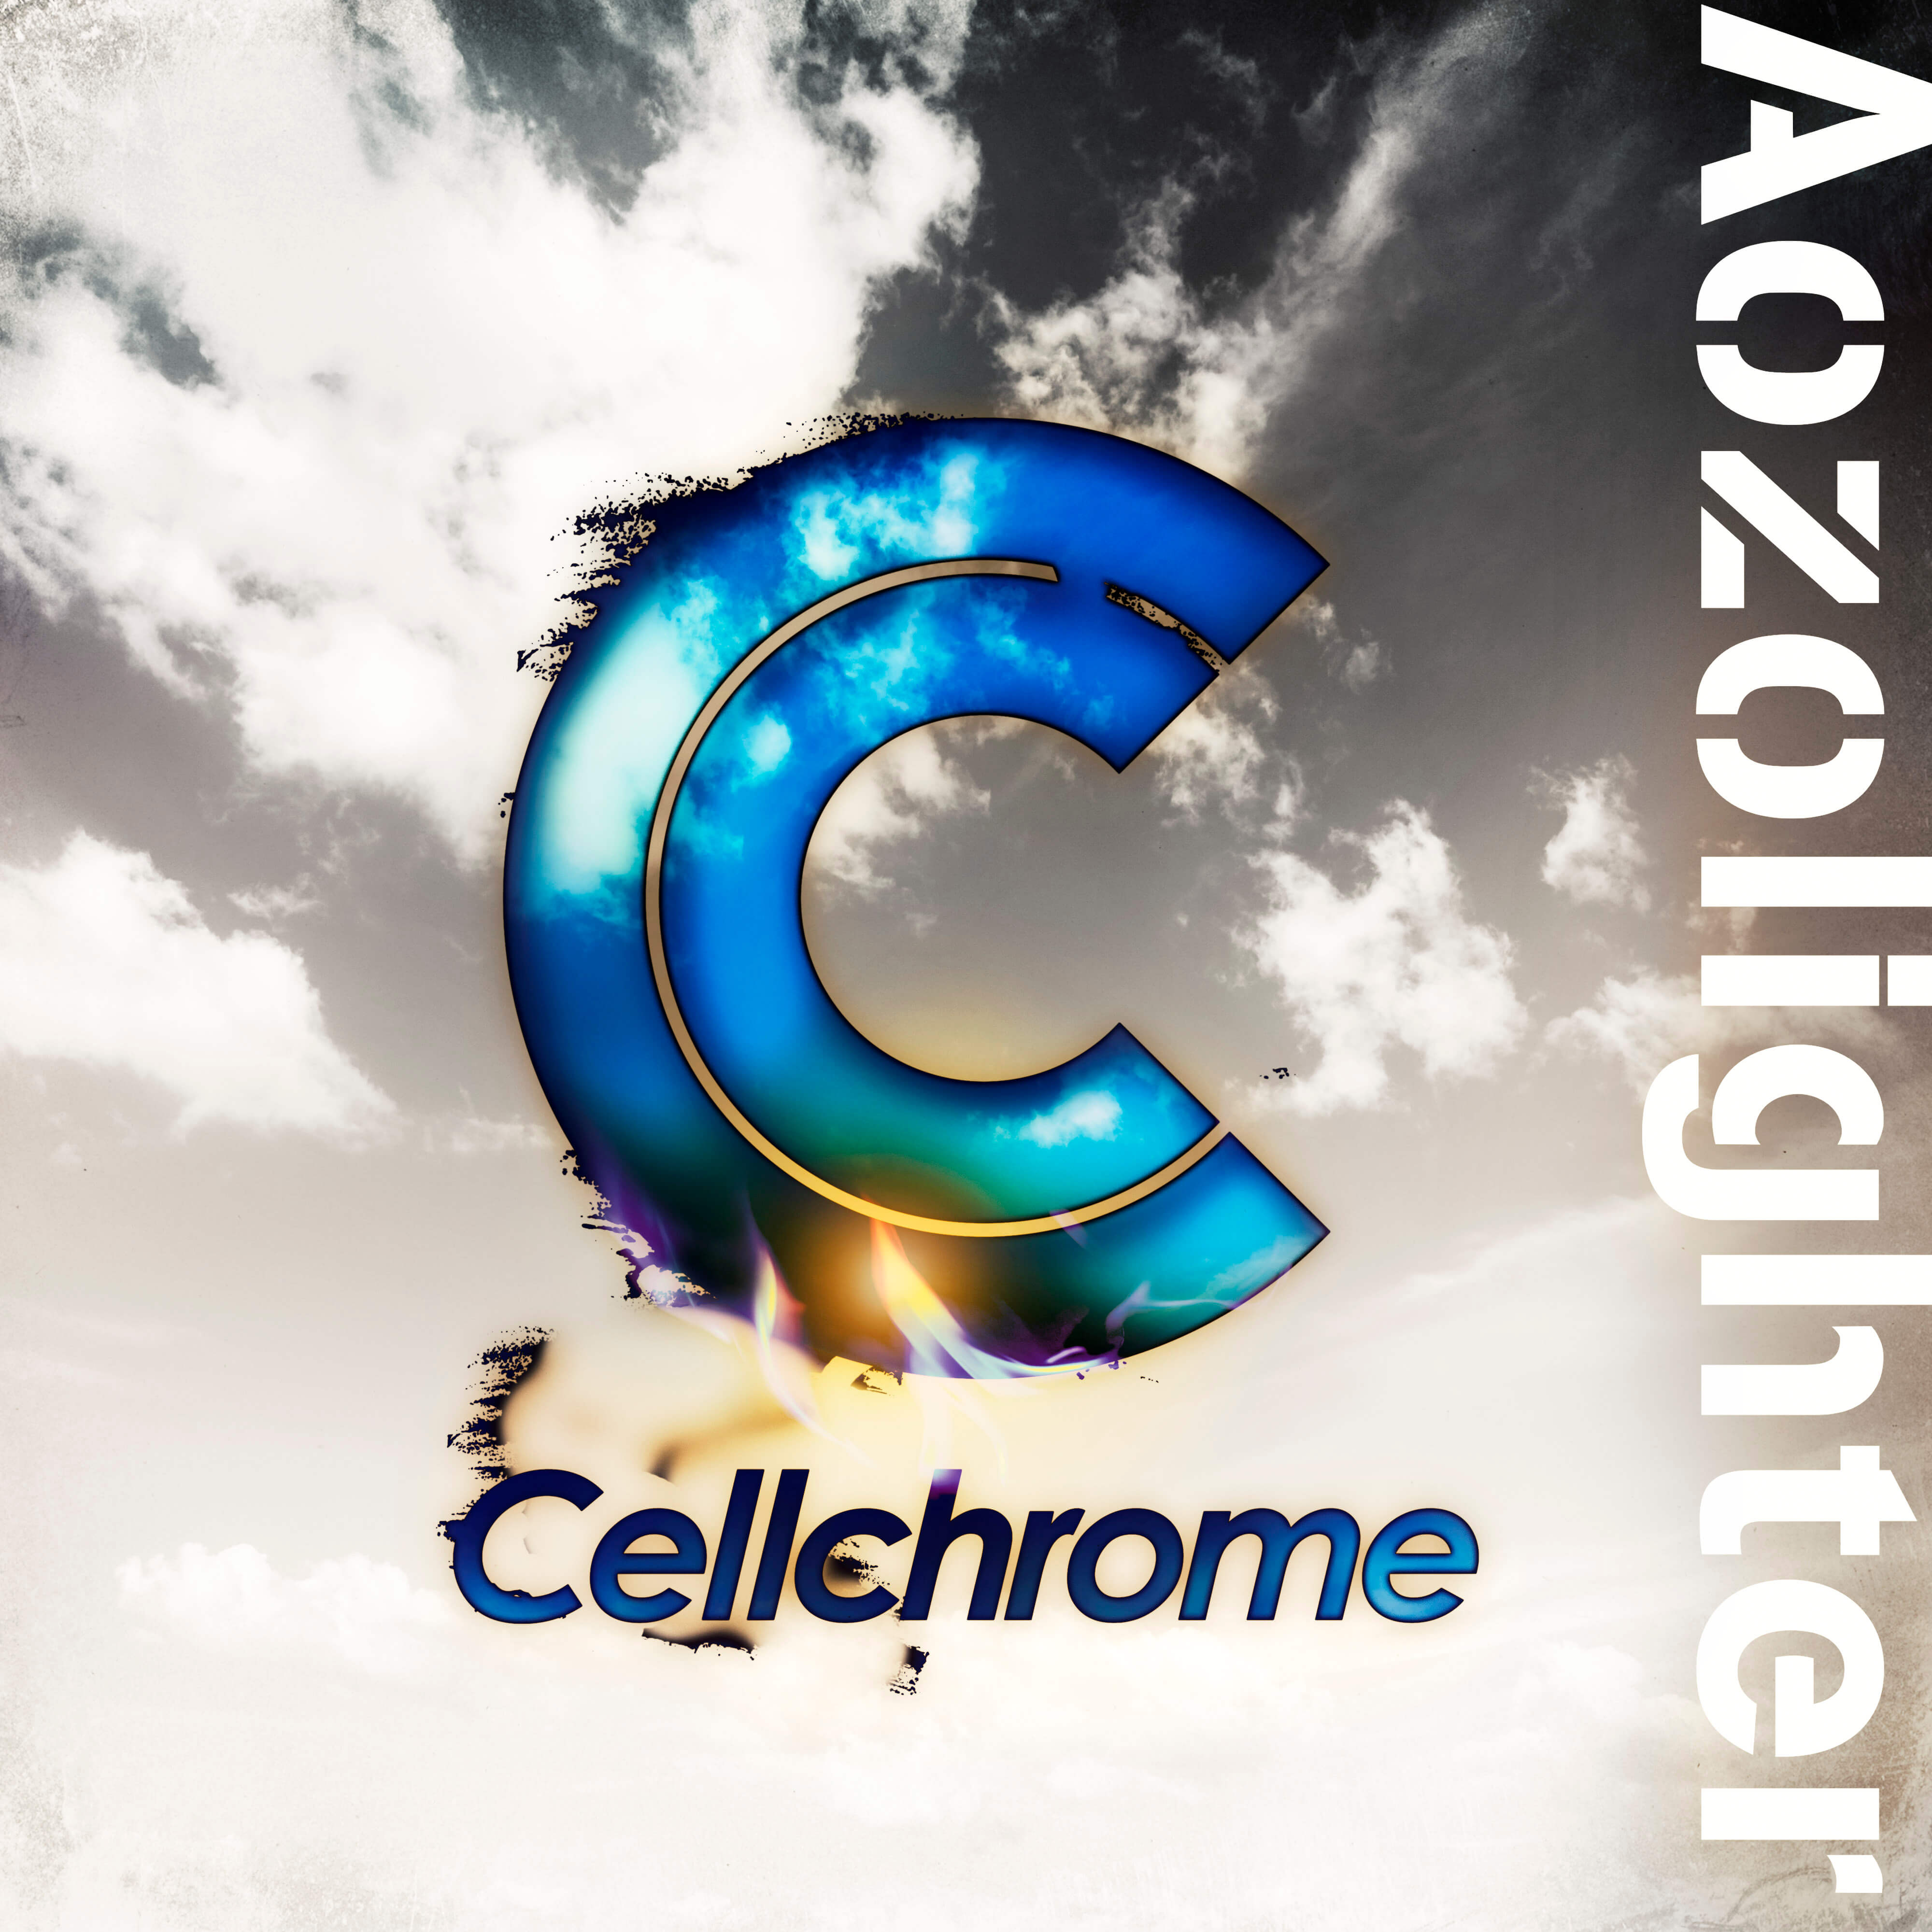 Aozolighter / Cellchrome